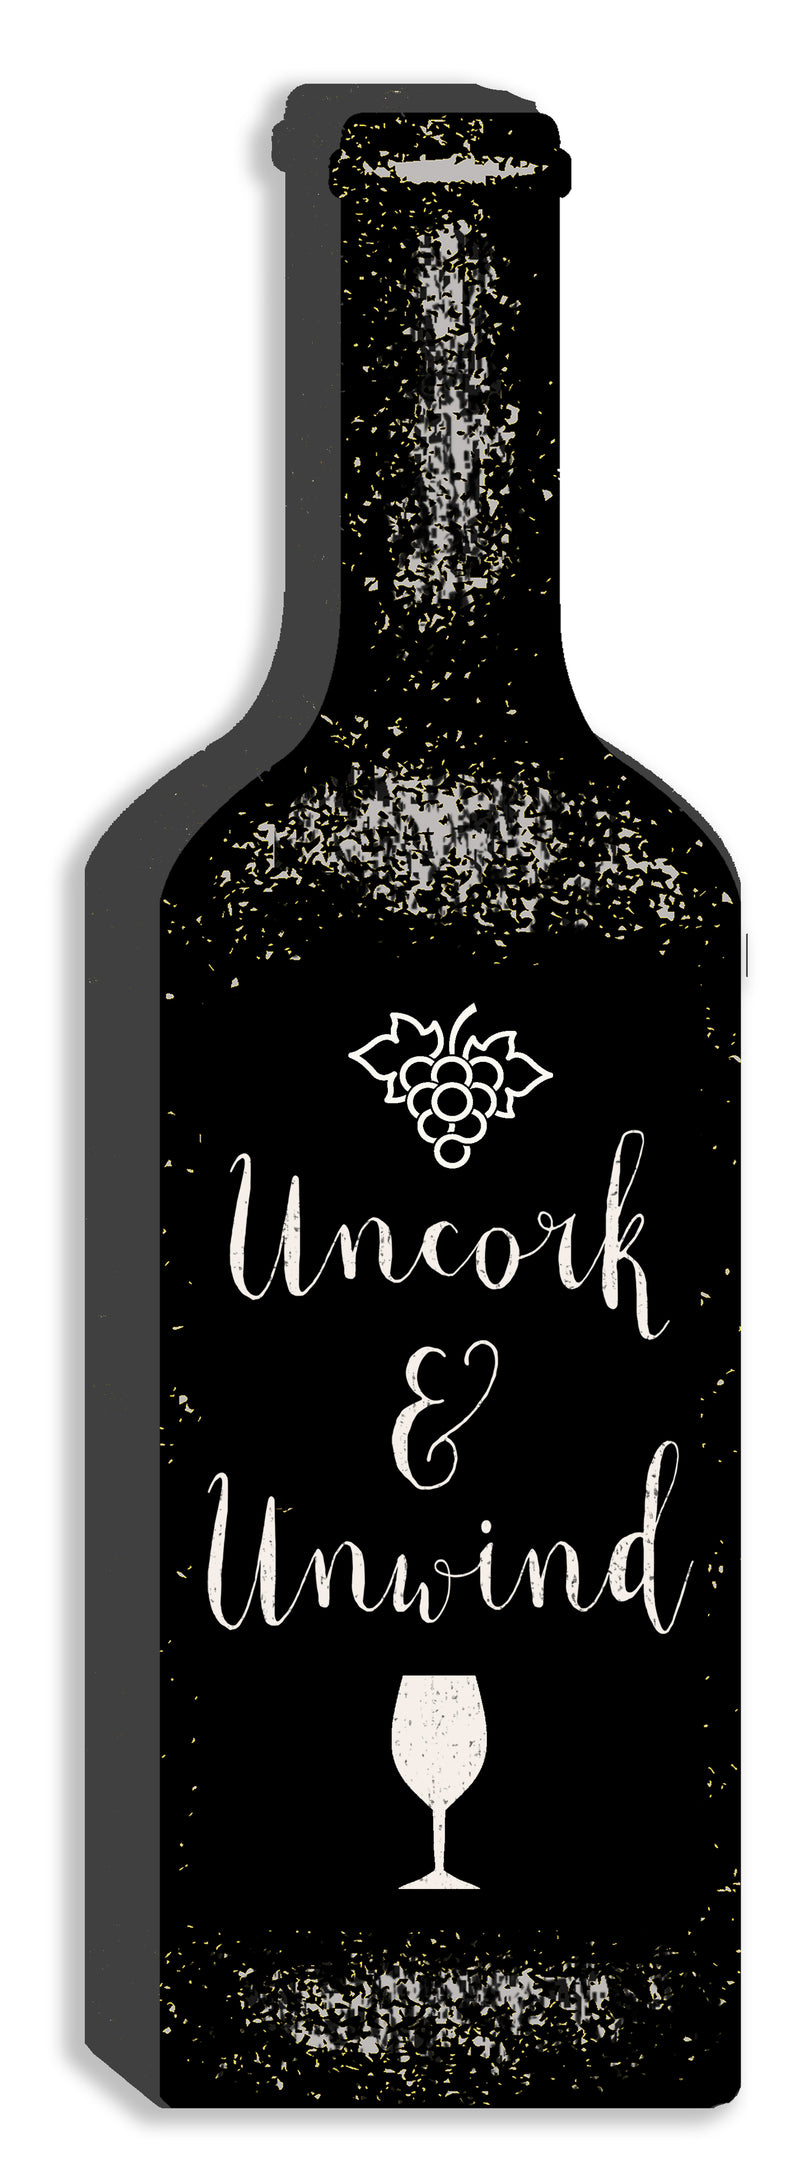 'Uncork & Unwind' Cut Out 12X4